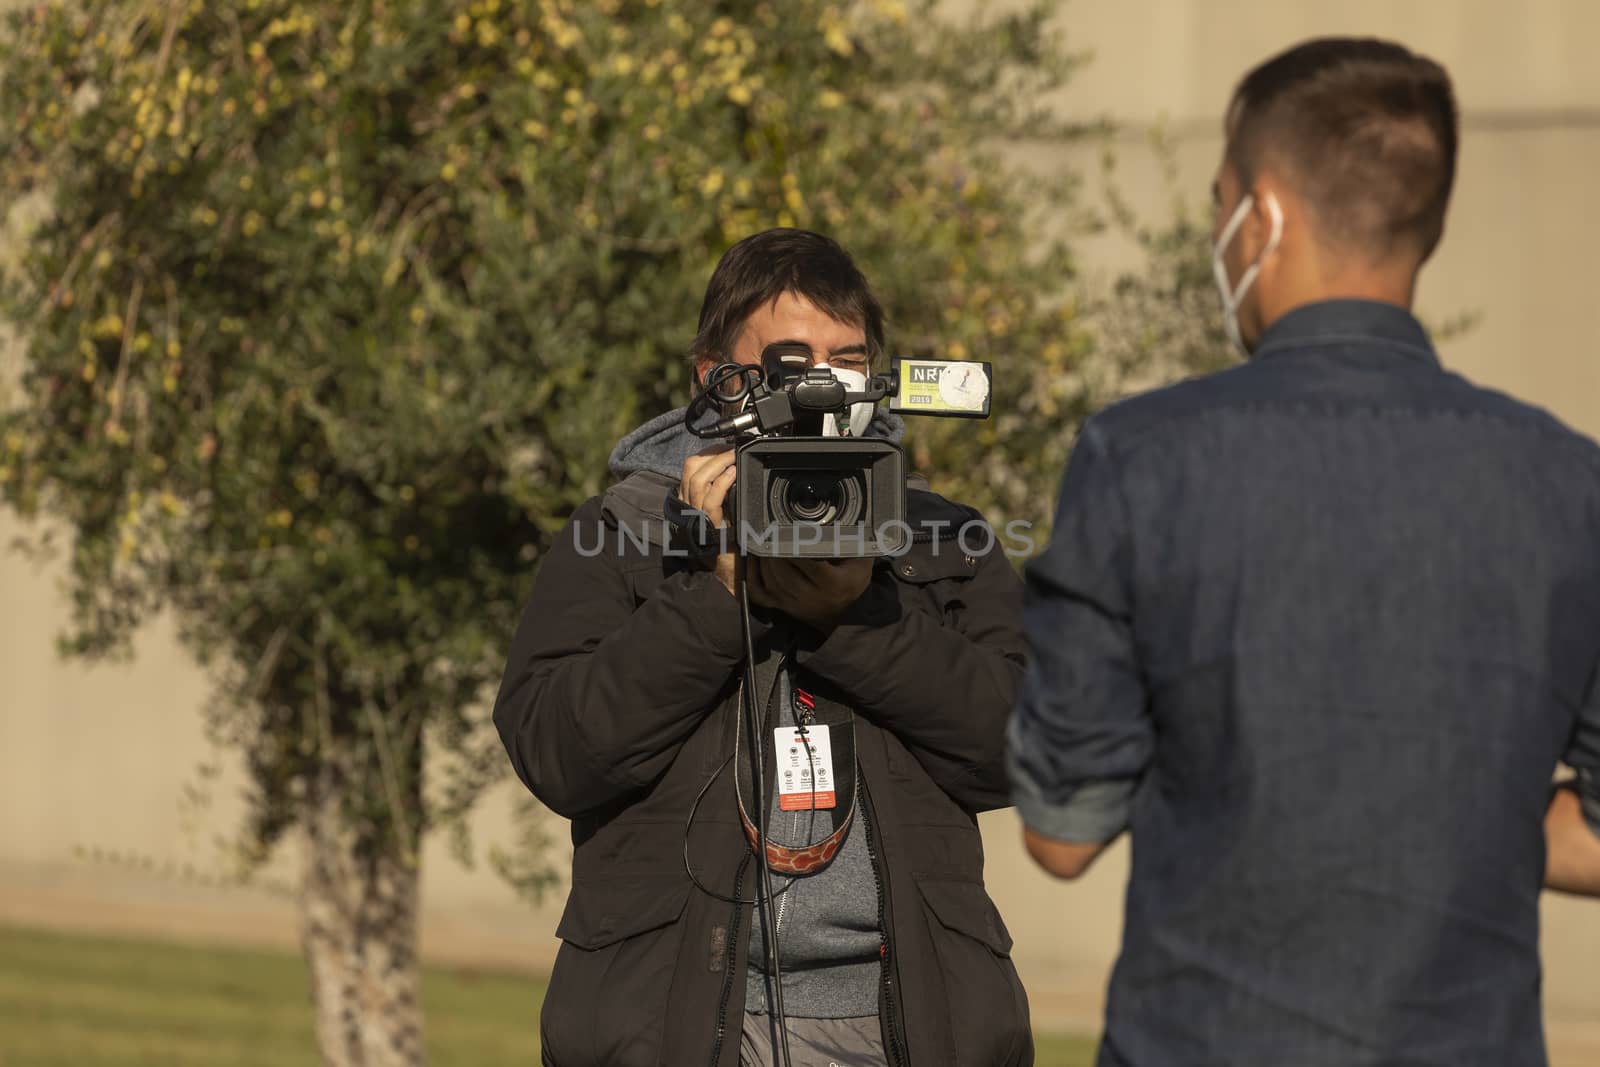 Journalists, photographers and media of La Vuelta, Spain by alvarobueno